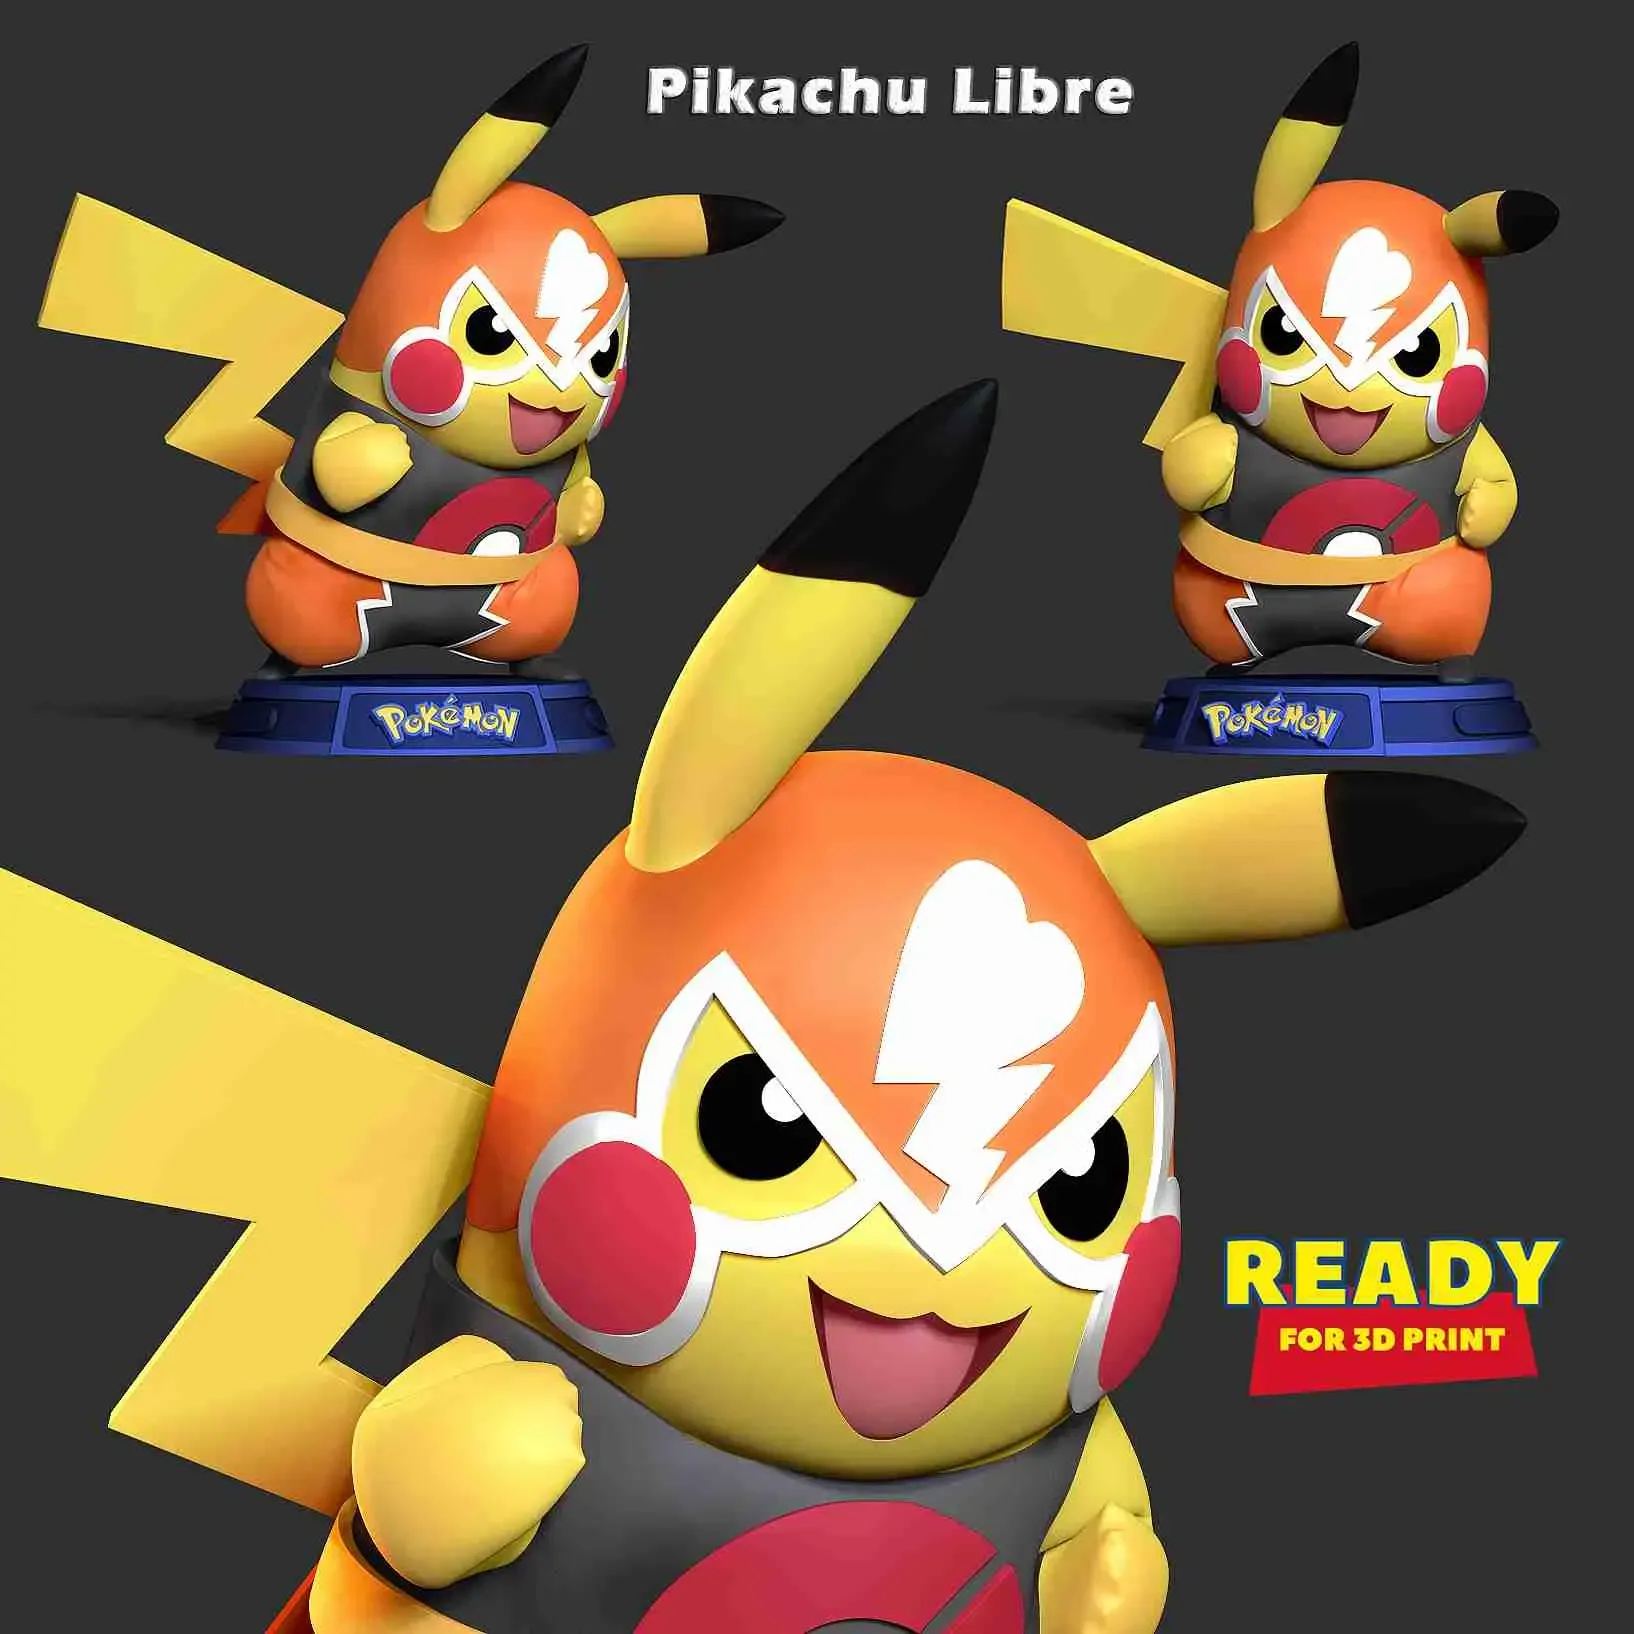 Pikachu Libre